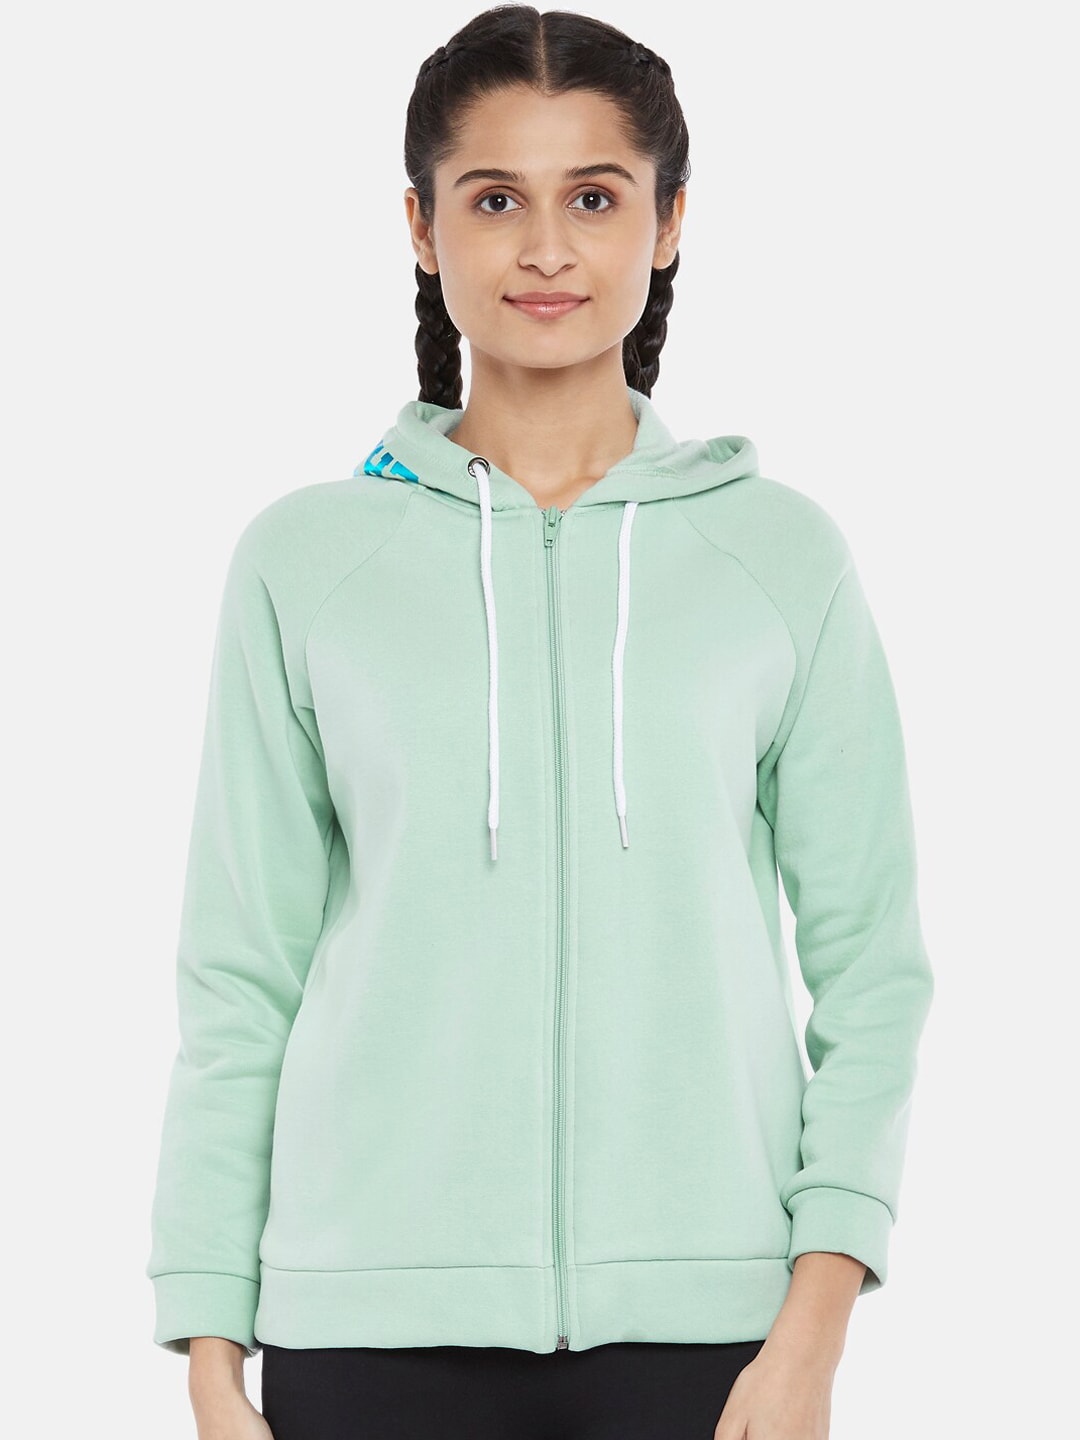 Ajile by Pantaloons Women Sea Green Hooded Sweatshirt Price in India